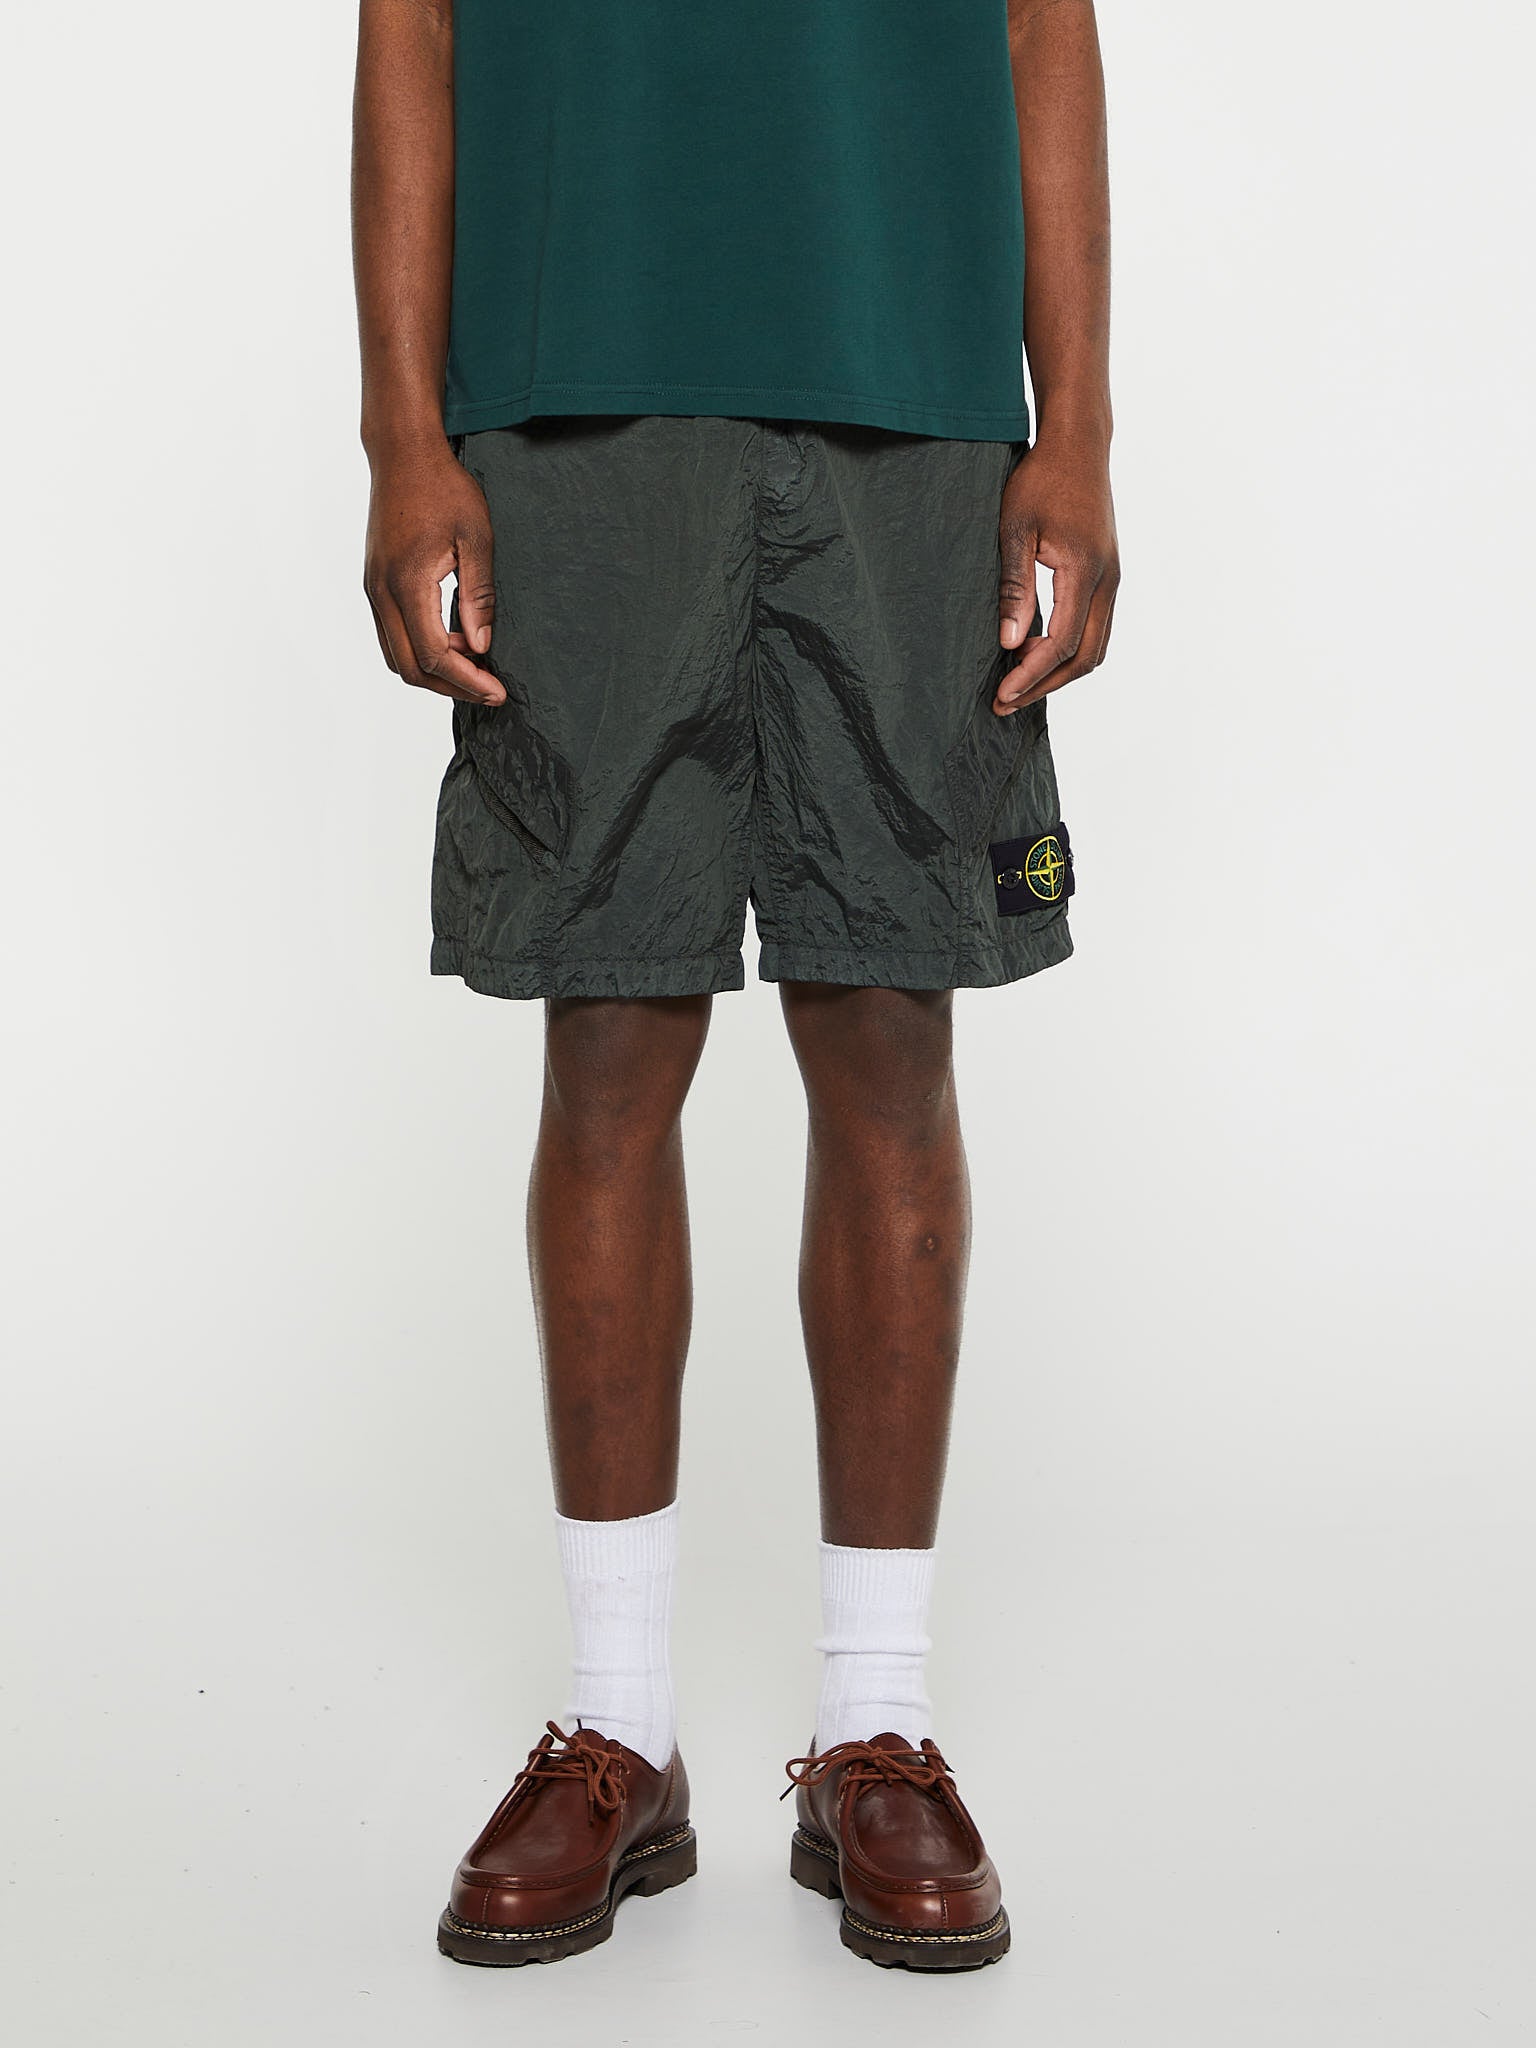 Stone Island - Bermuda Shorts in Green